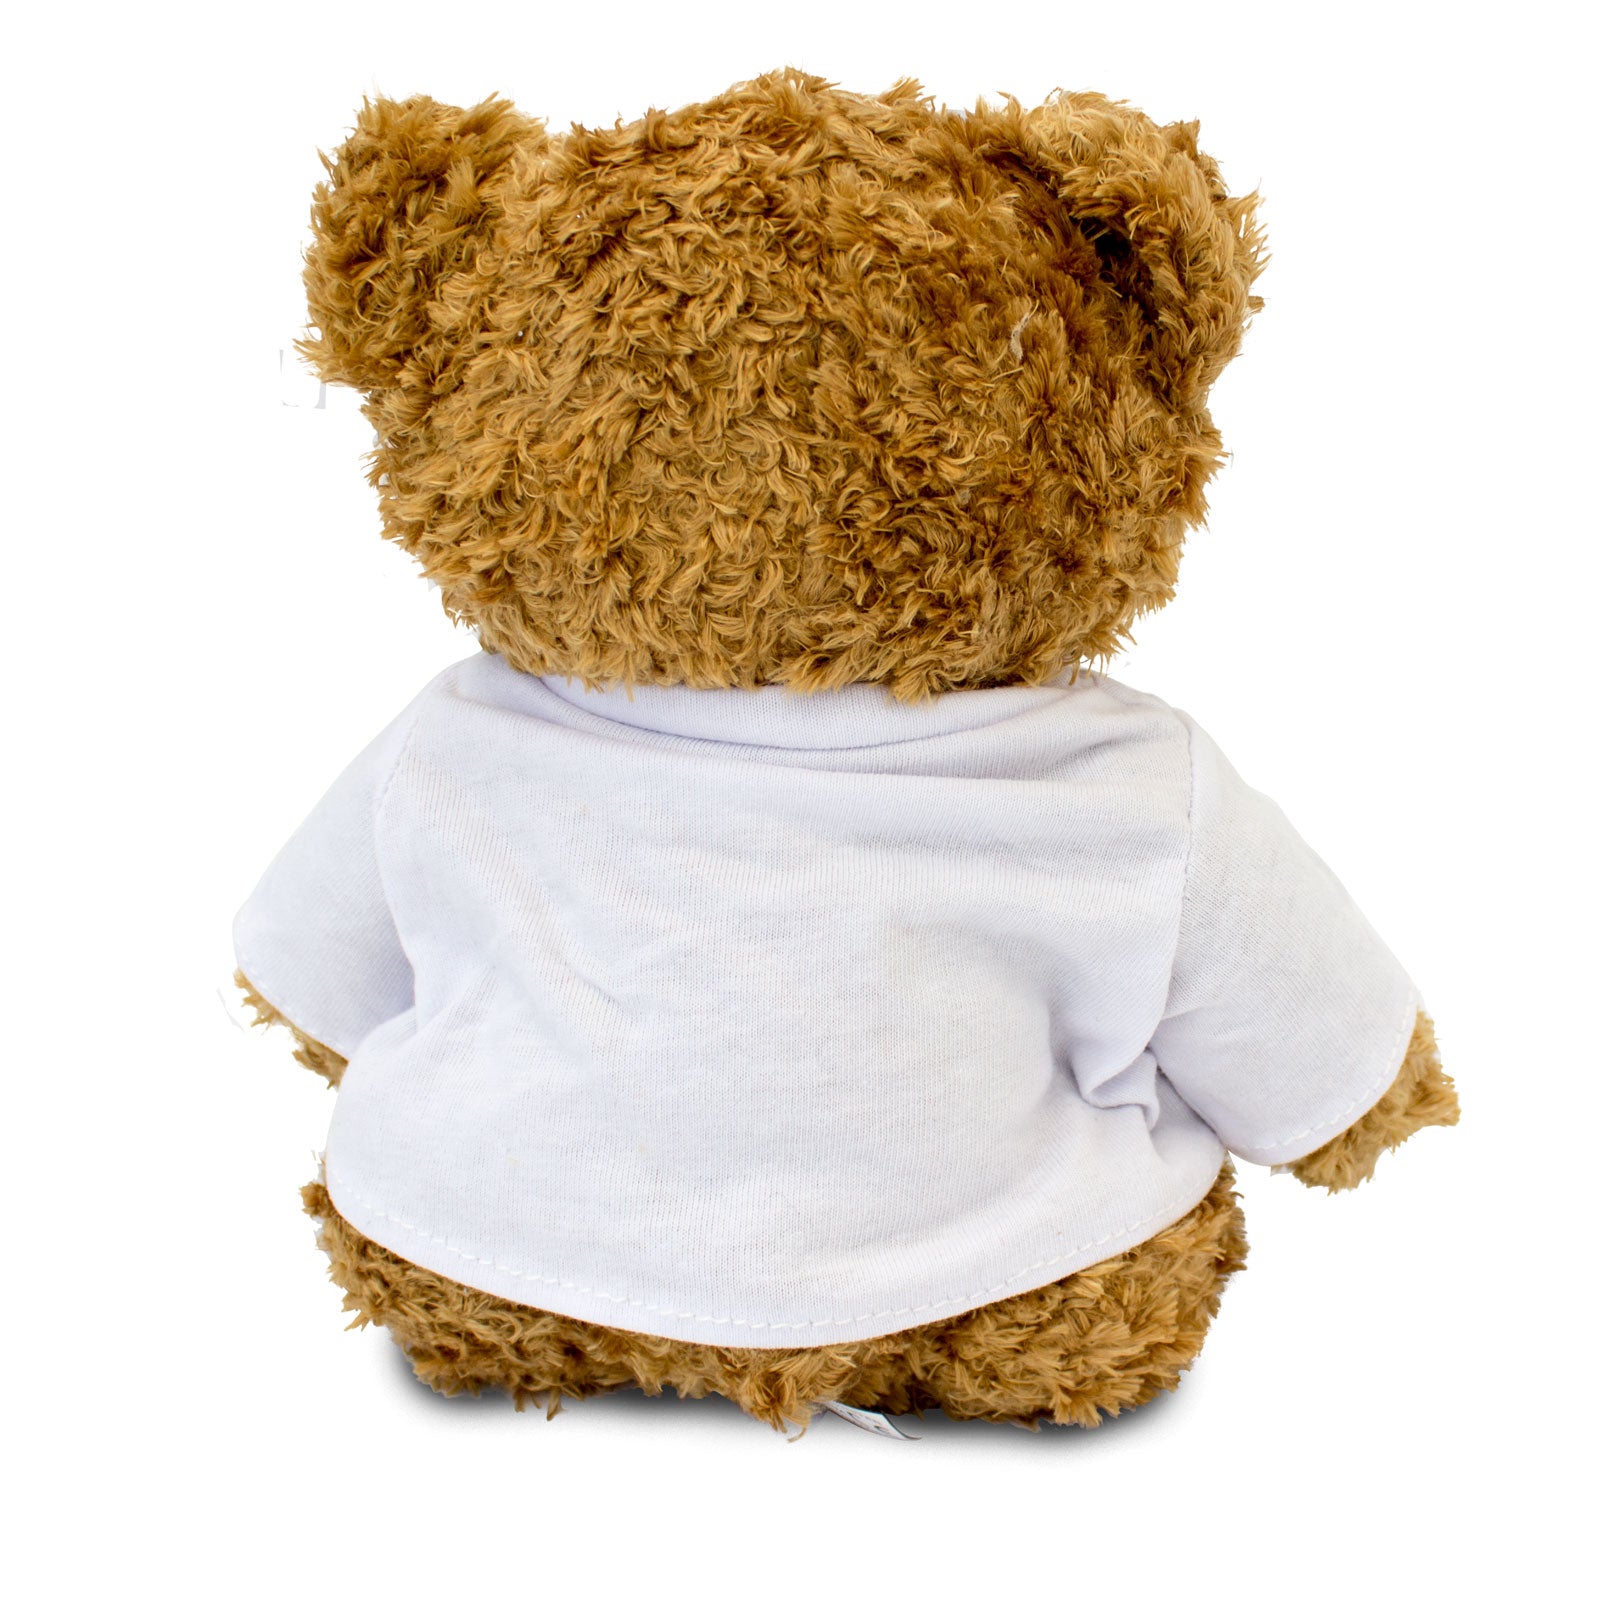 Get Well Soon Mom - Teddy Bear